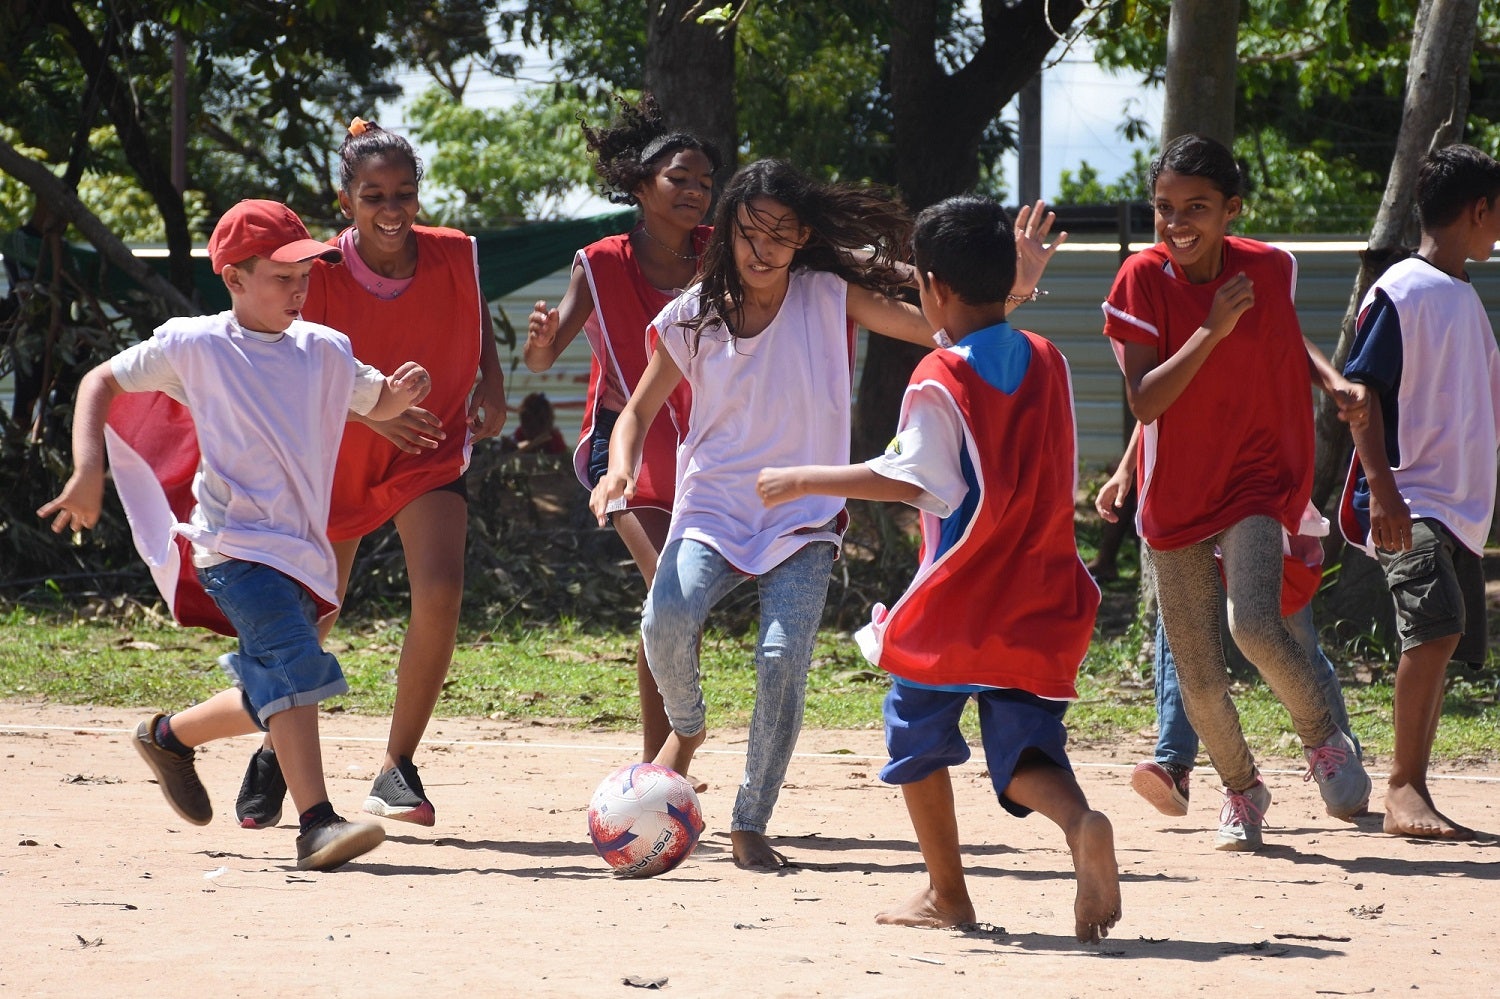 Photo of Futbol Sin Fronteras programme by UNHCR in Boa Vista Brazil